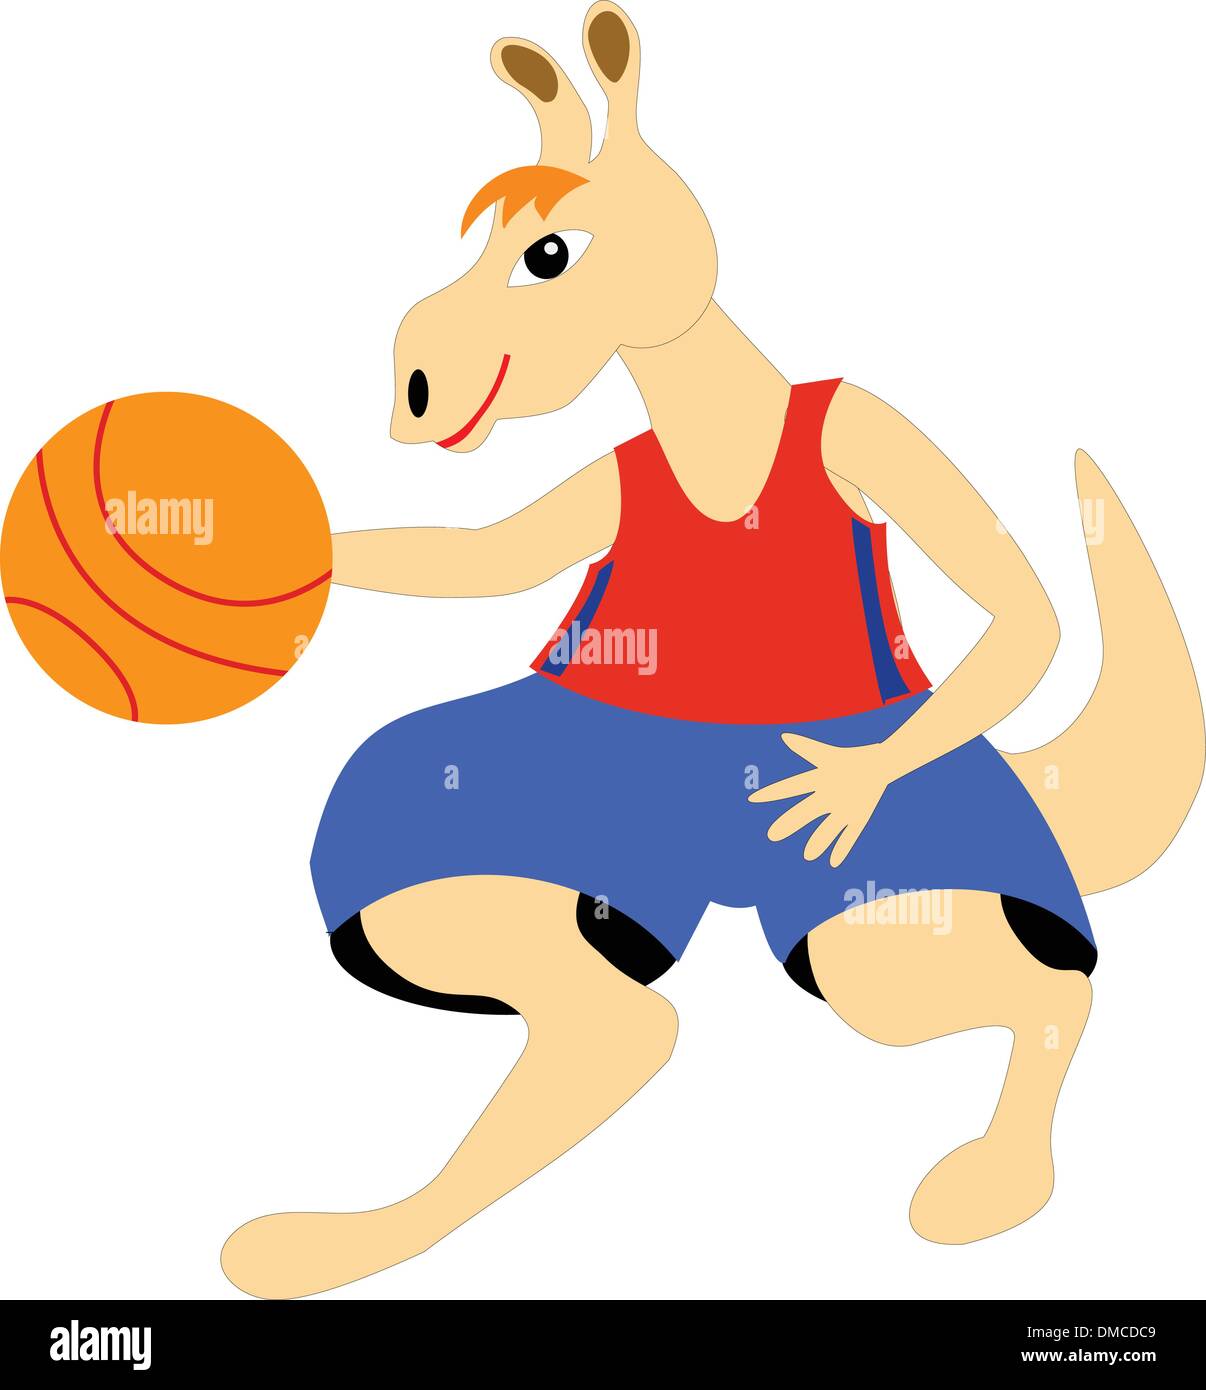 Joueur de basket-ball - kangourou Image Vectorielle Stock - Alamy